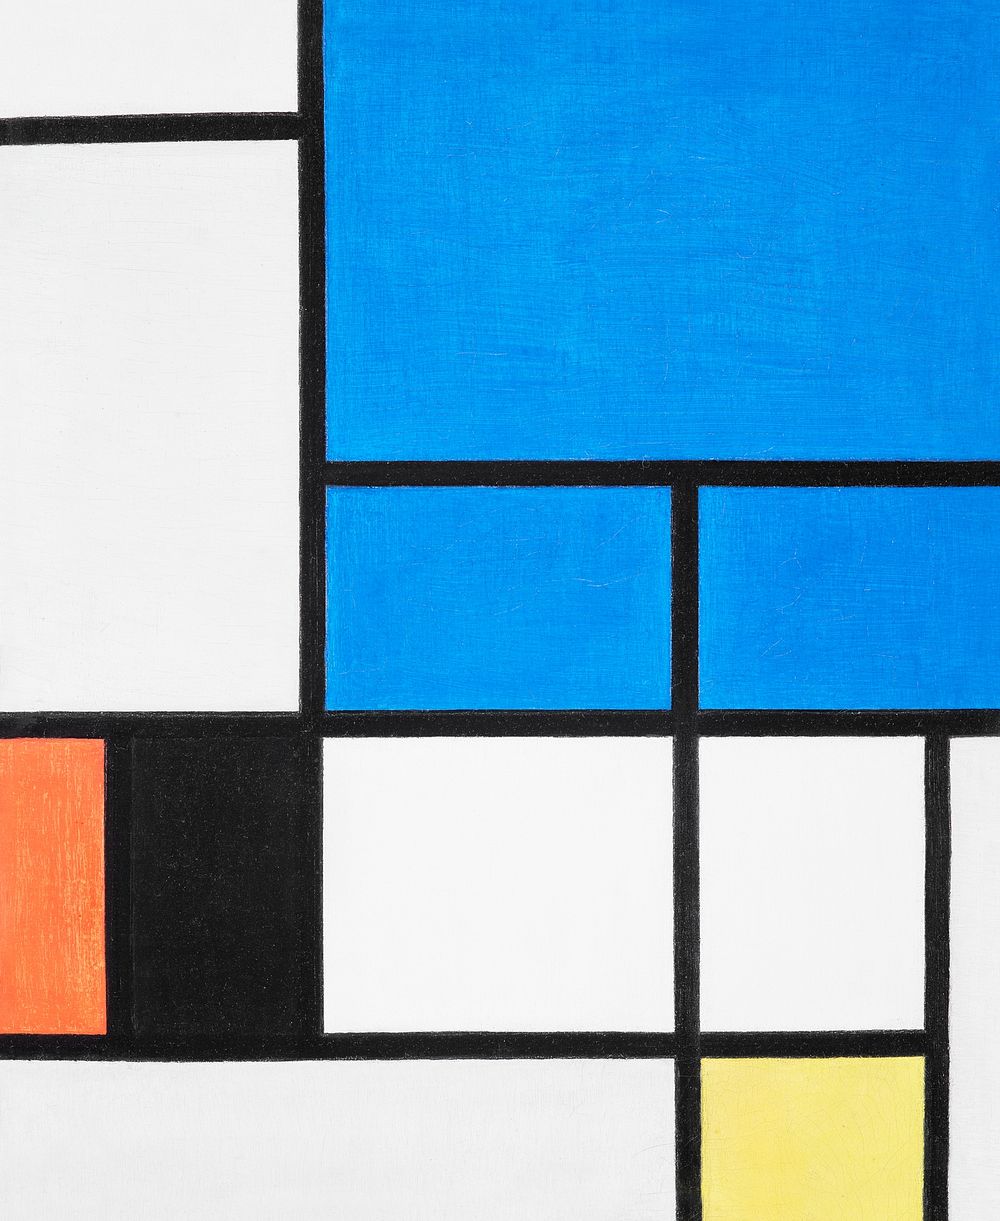 Piet Mondrian&rsquo;s Composition, Cubism art. Remixed by rawpixel.